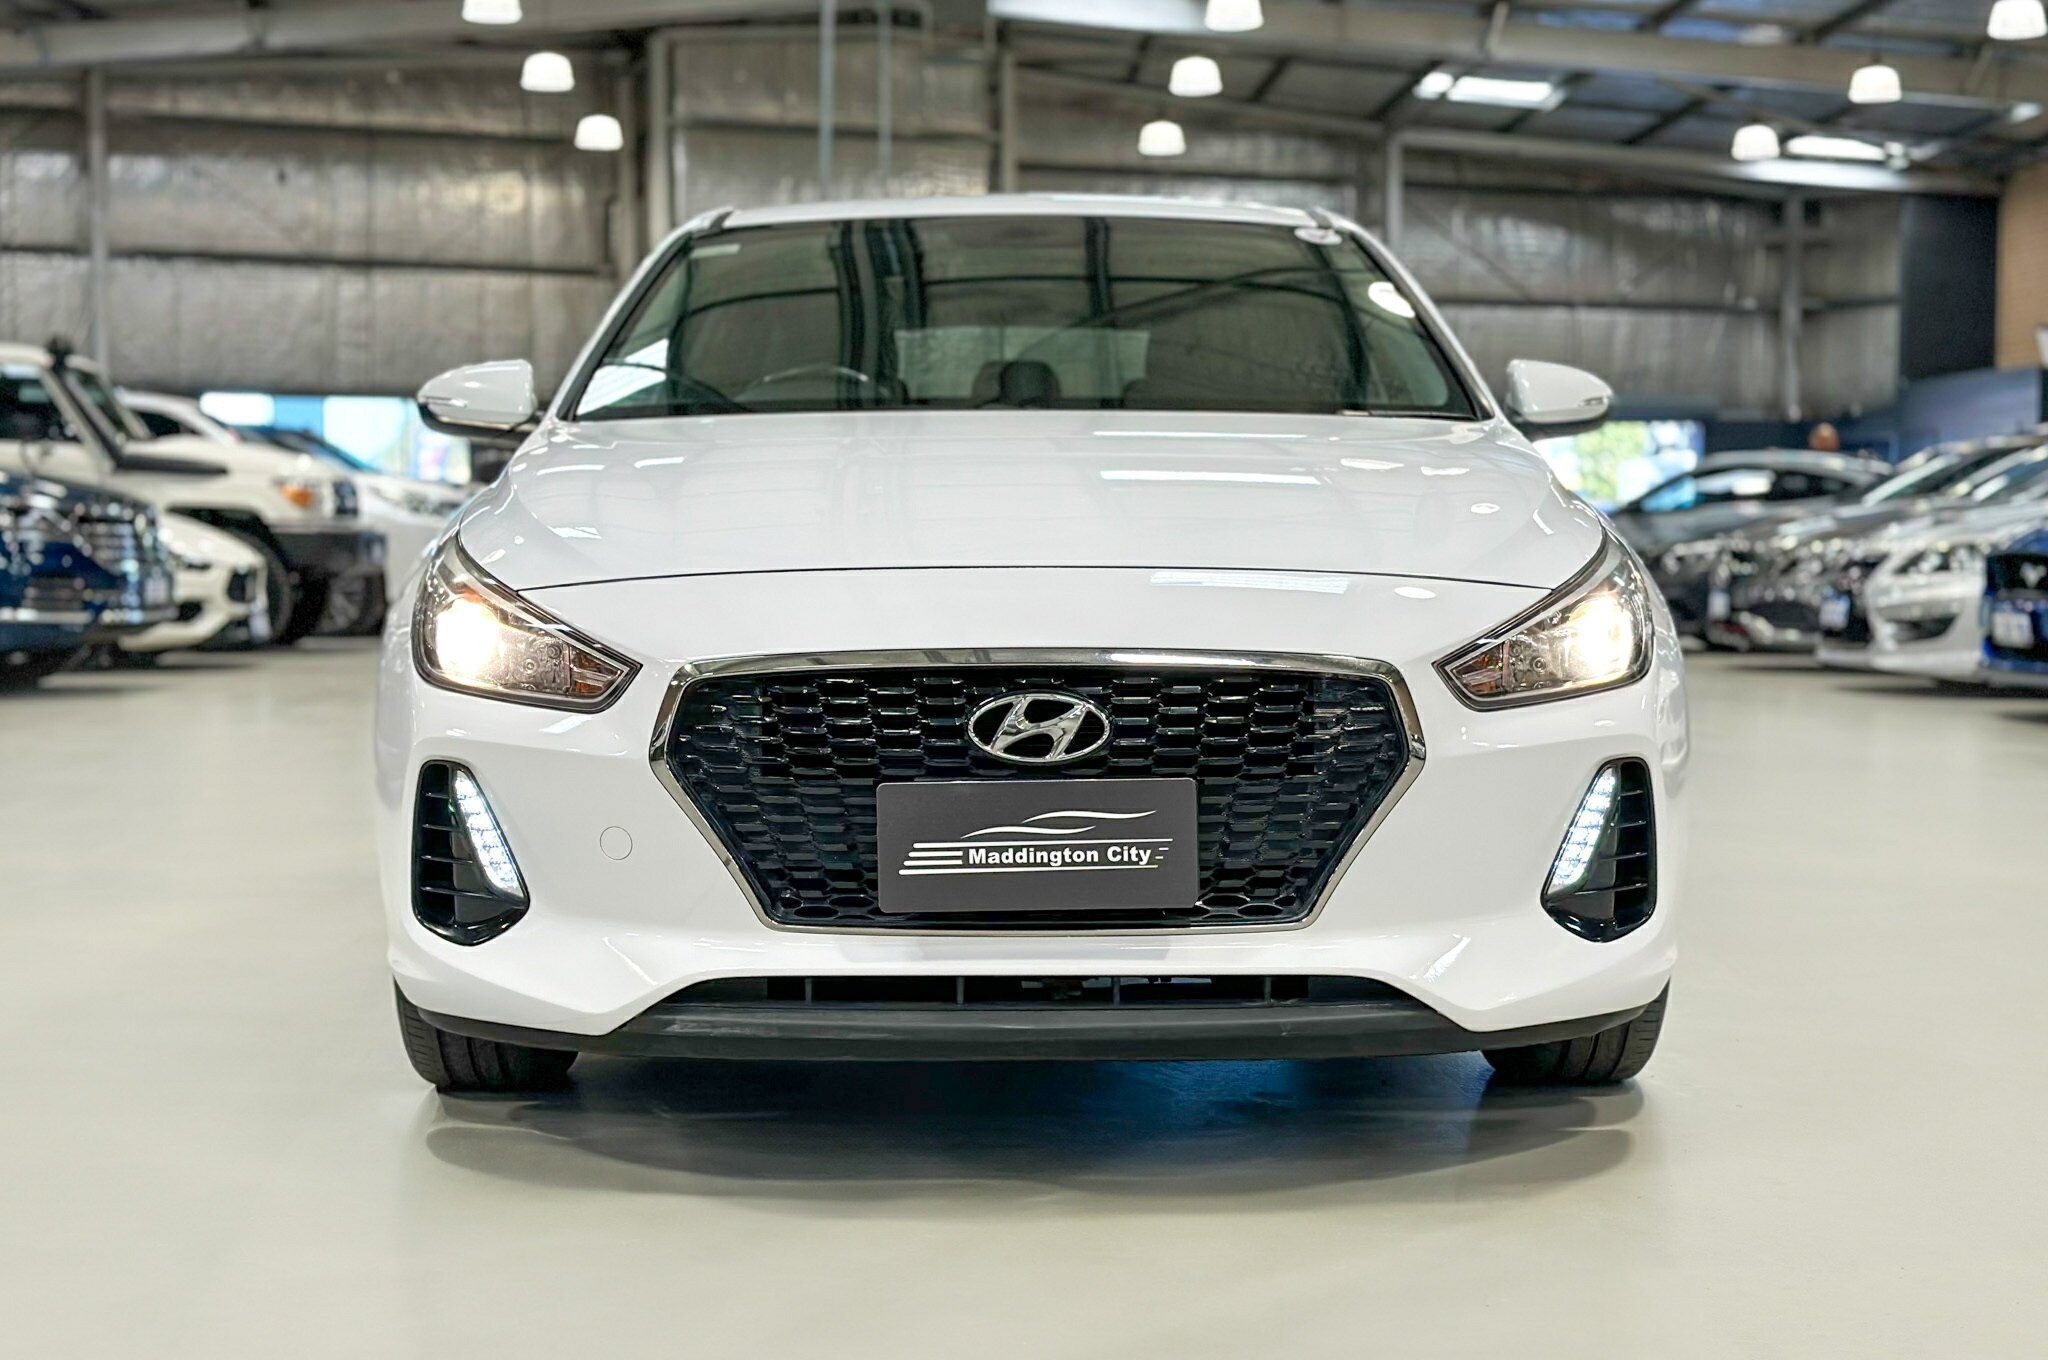 Hyundai I30 image 2